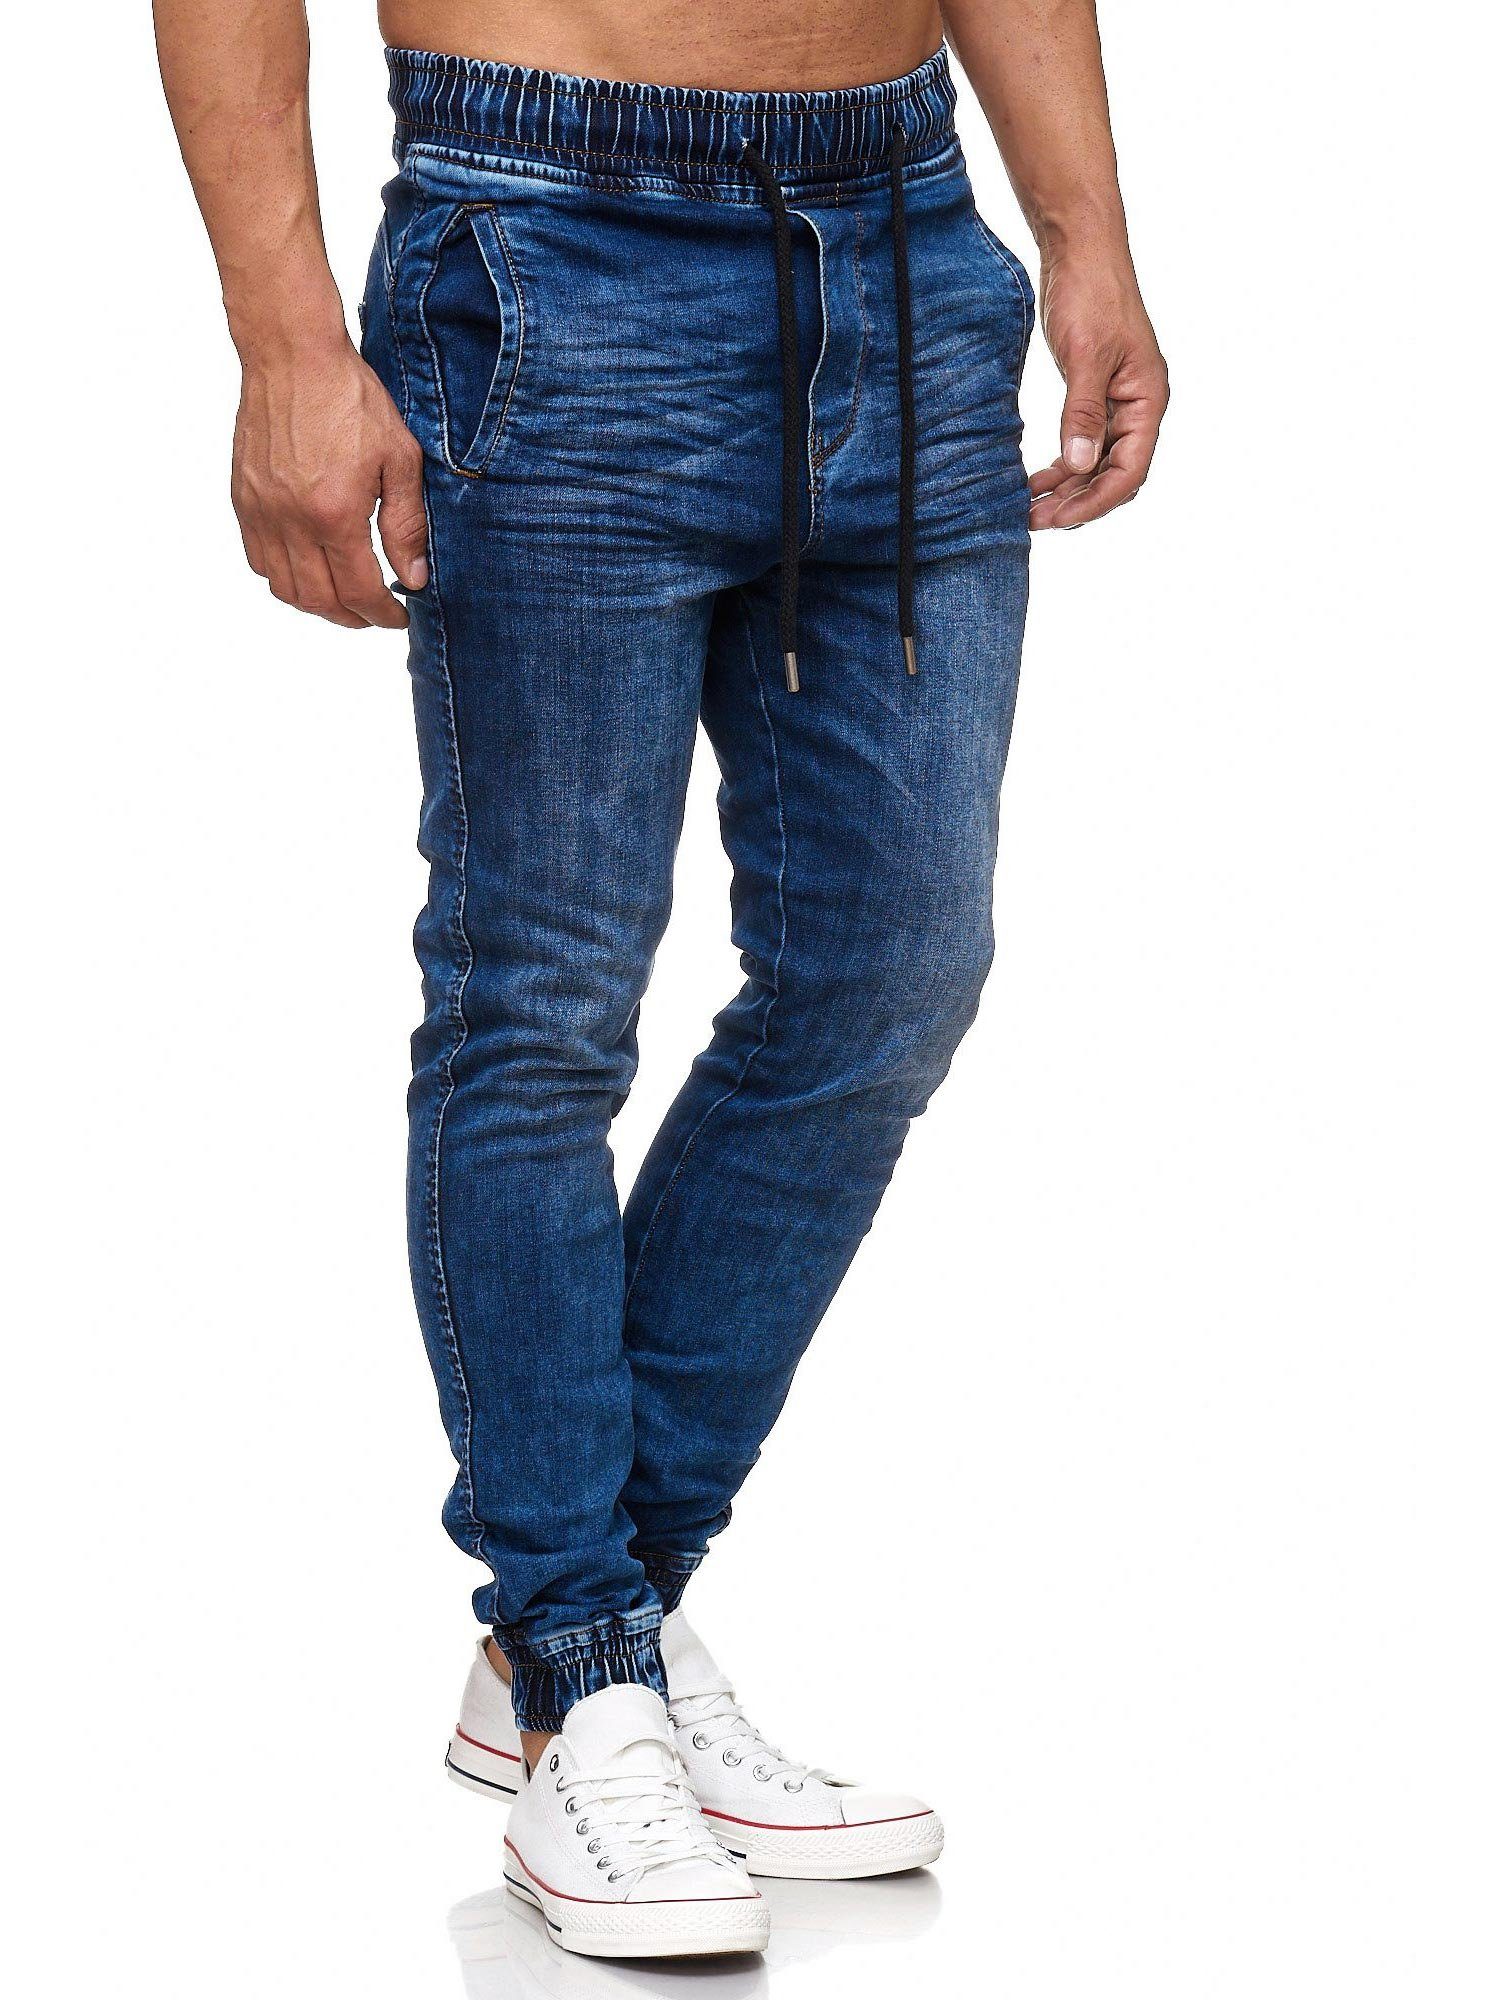 im Hose 17504 Tazzio Sweat blau Jogger-Stil Straight-Jeans